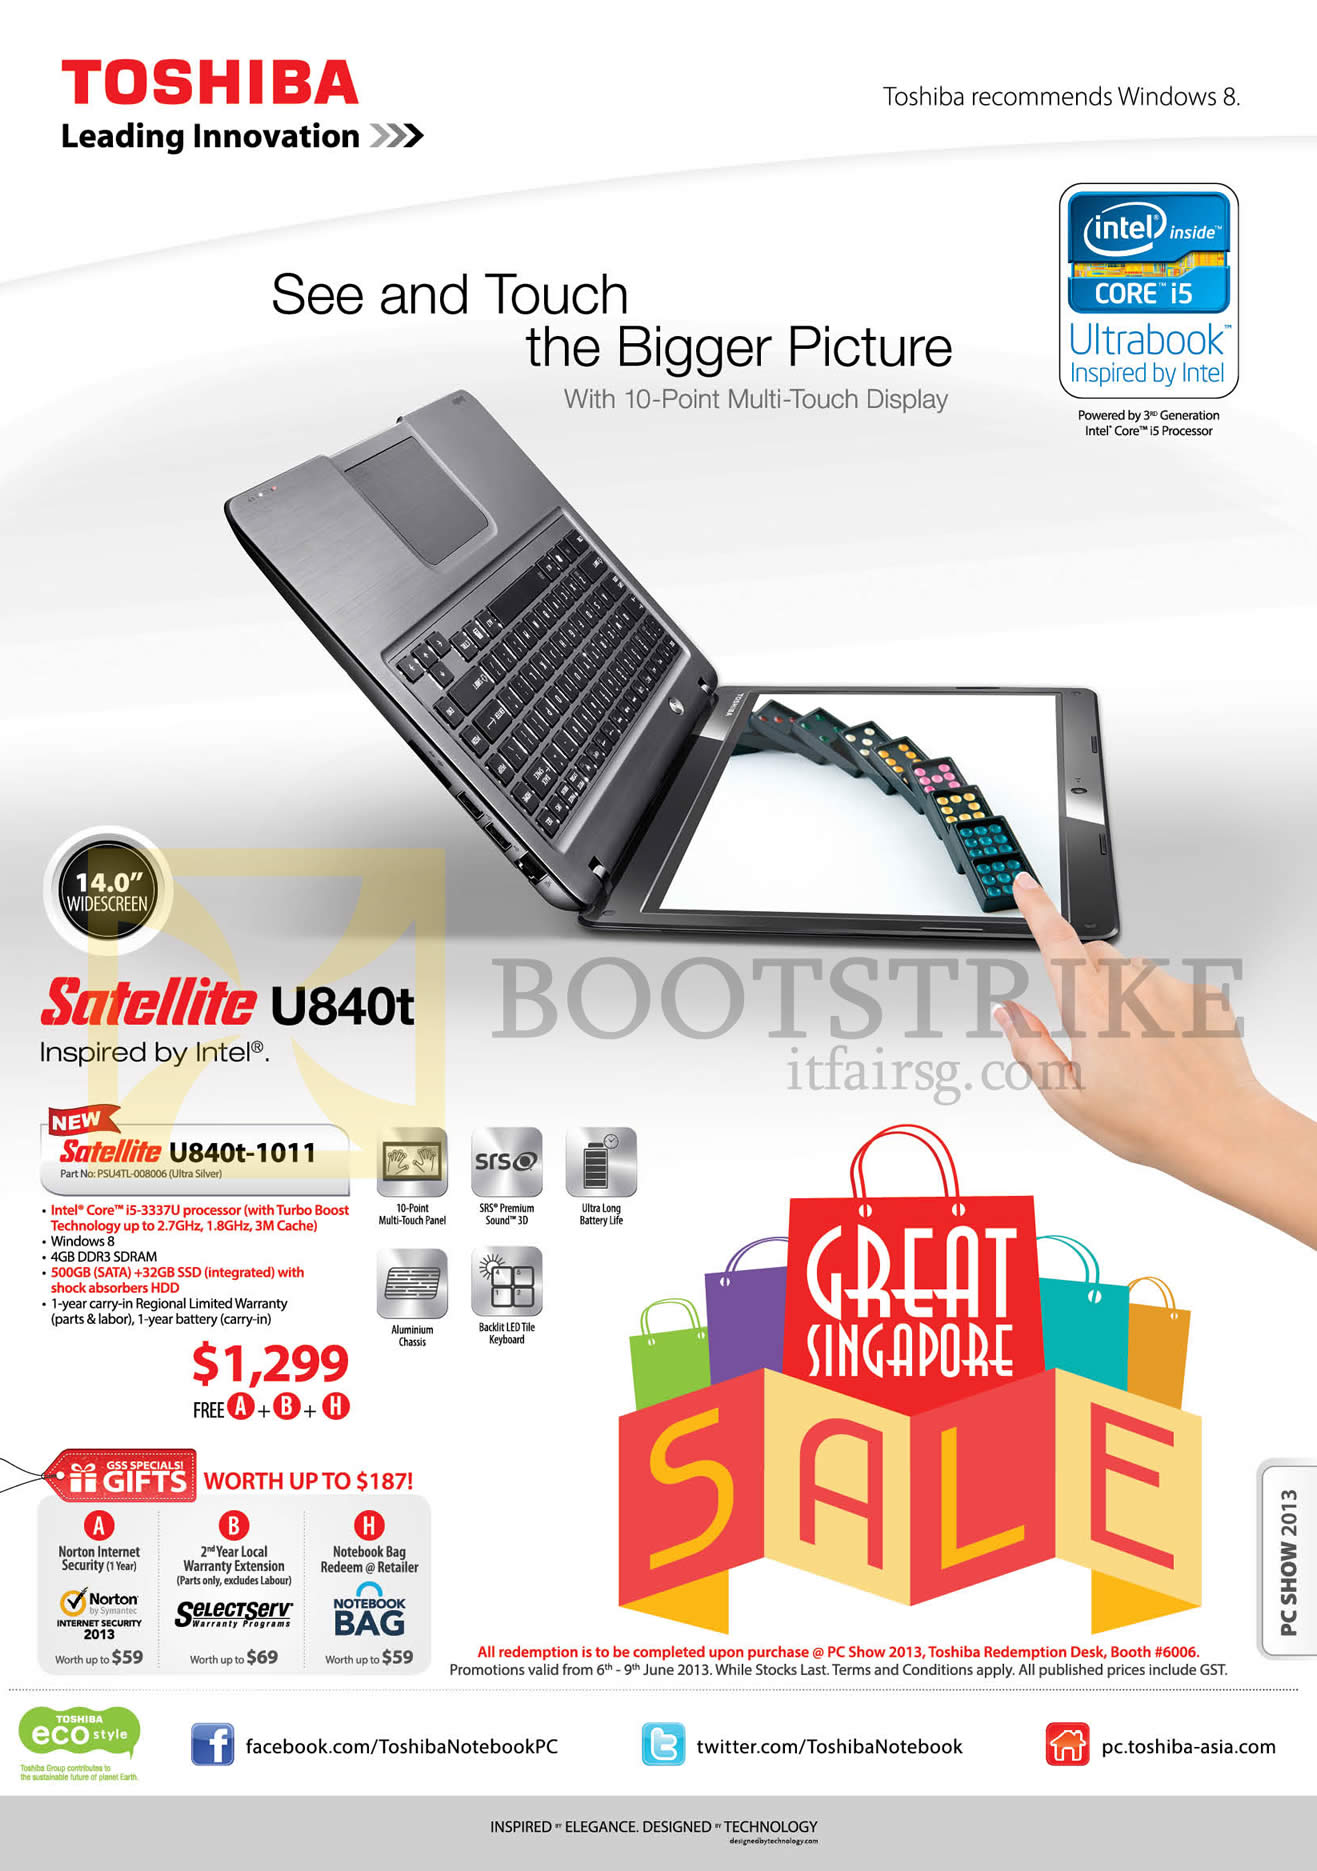 PC SHOW 2013 price list image brochure of Toshiba Notebooks Satellite U840t-1011 Notebook